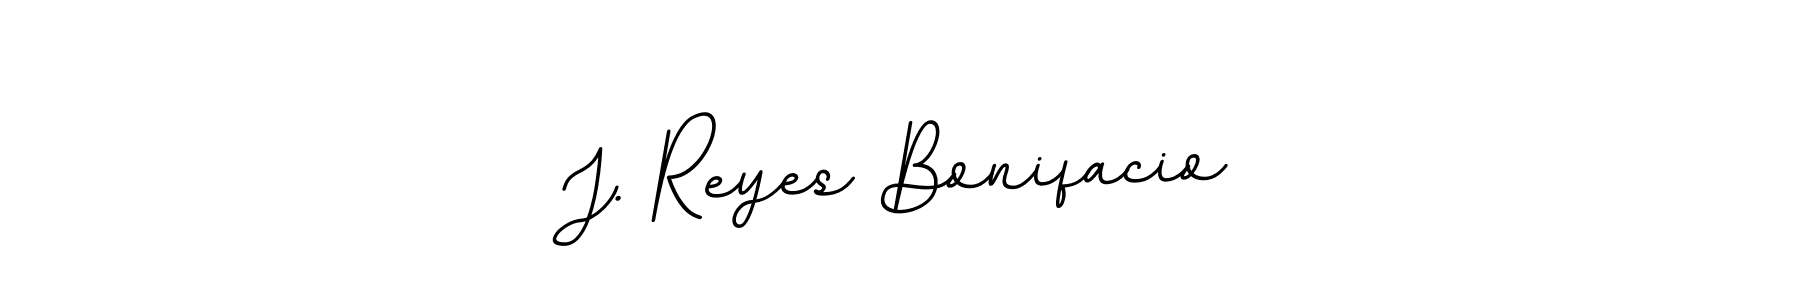 How to Draw J. Reyes Bonifacio signature style? BallpointsItalic-DORy9 is a latest design signature styles for name J. Reyes Bonifacio. J. Reyes Bonifacio signature style 11 images and pictures png